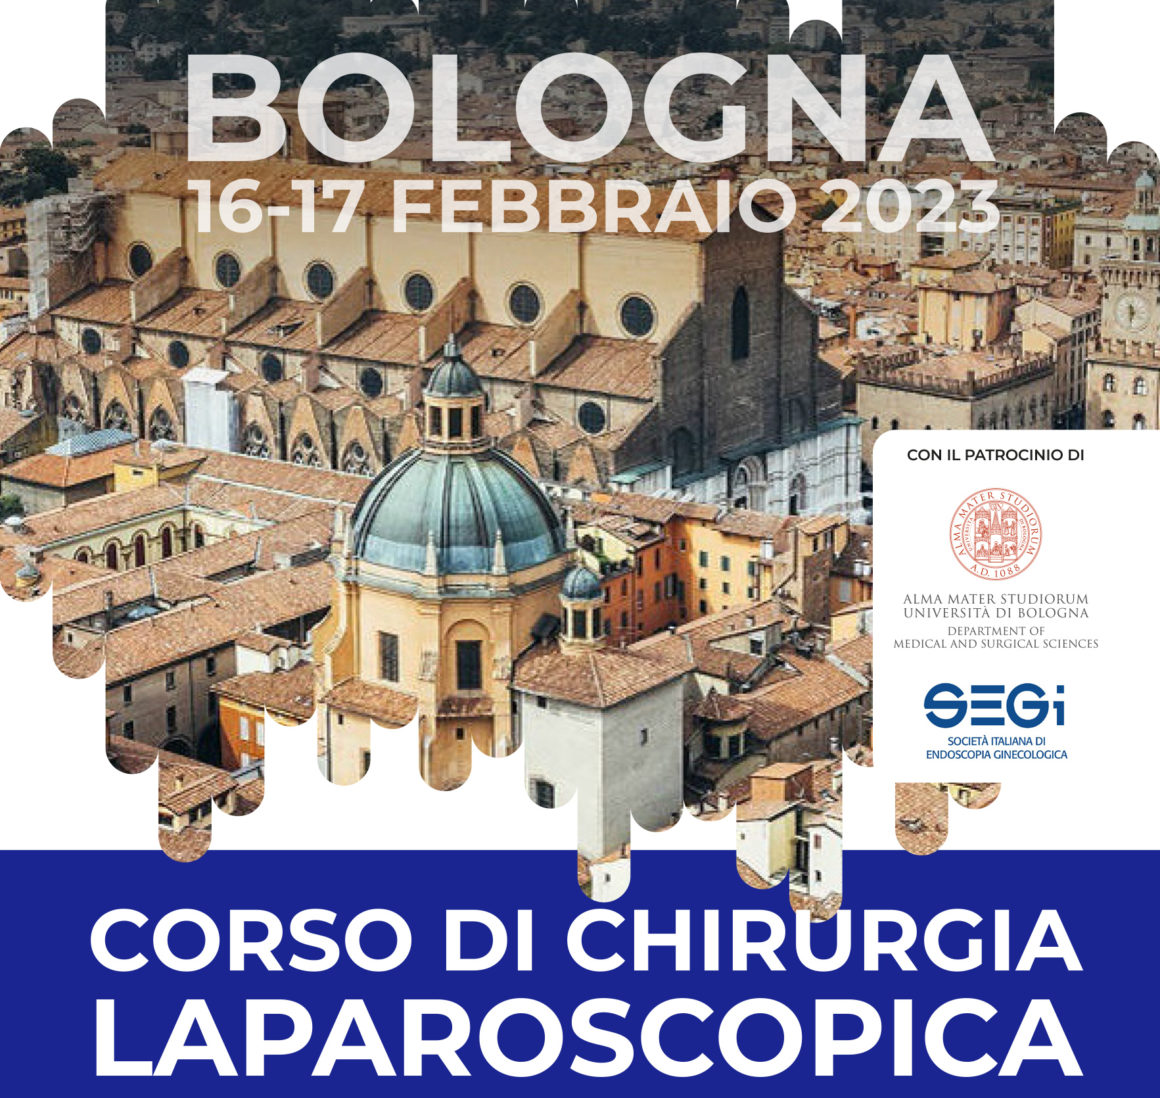 16th-17th February – Laparoscopic surgery course